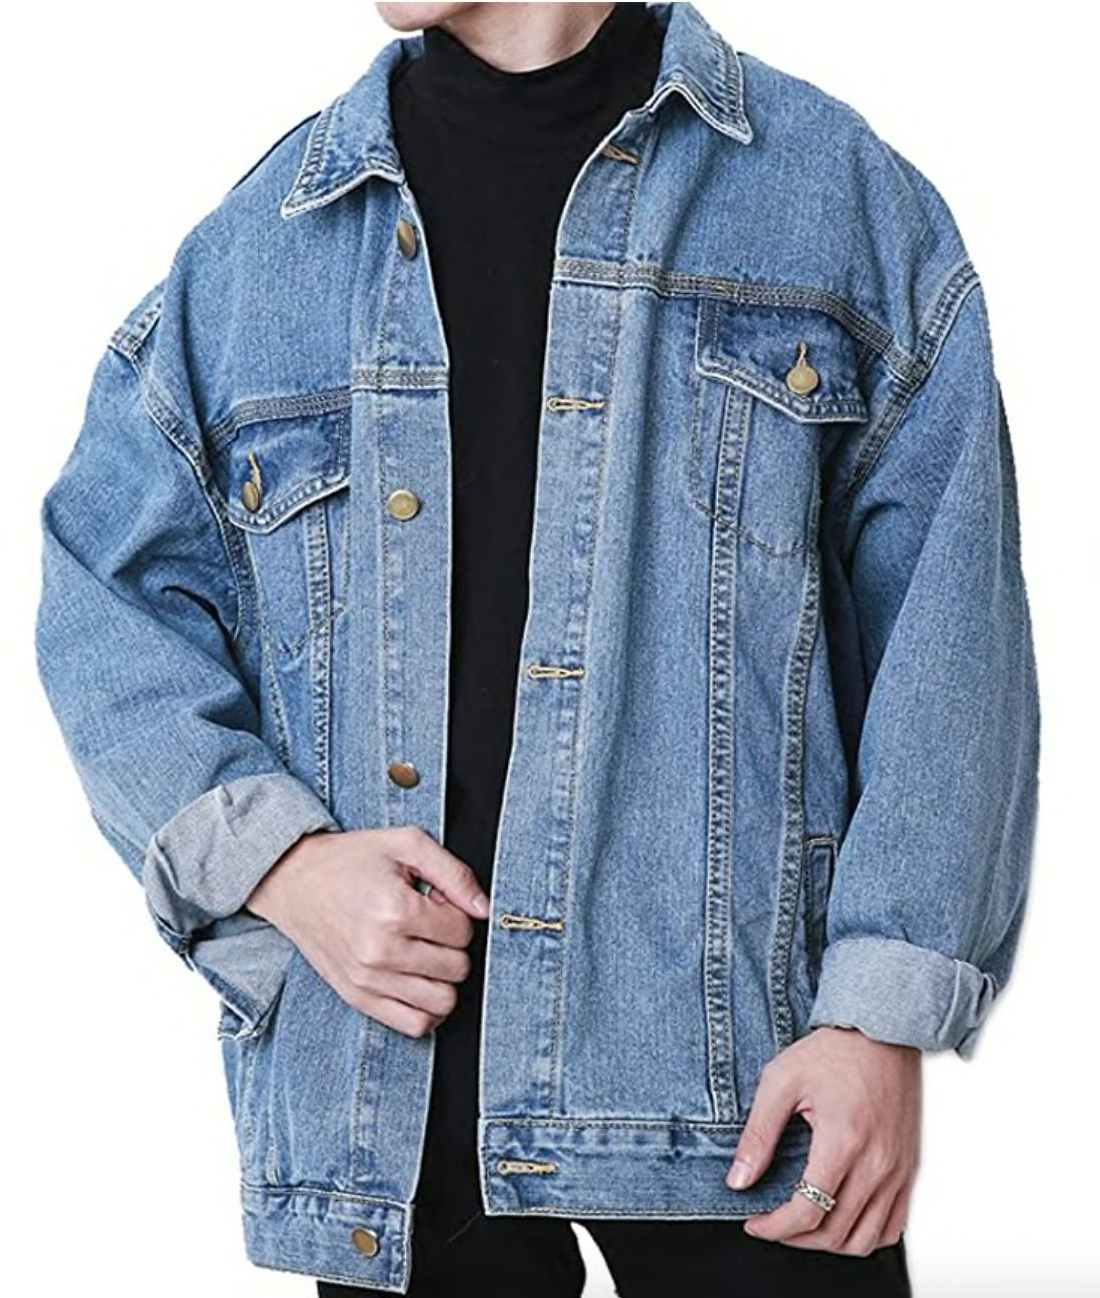 Hotmiss Men's Denim Jacket / Amazon